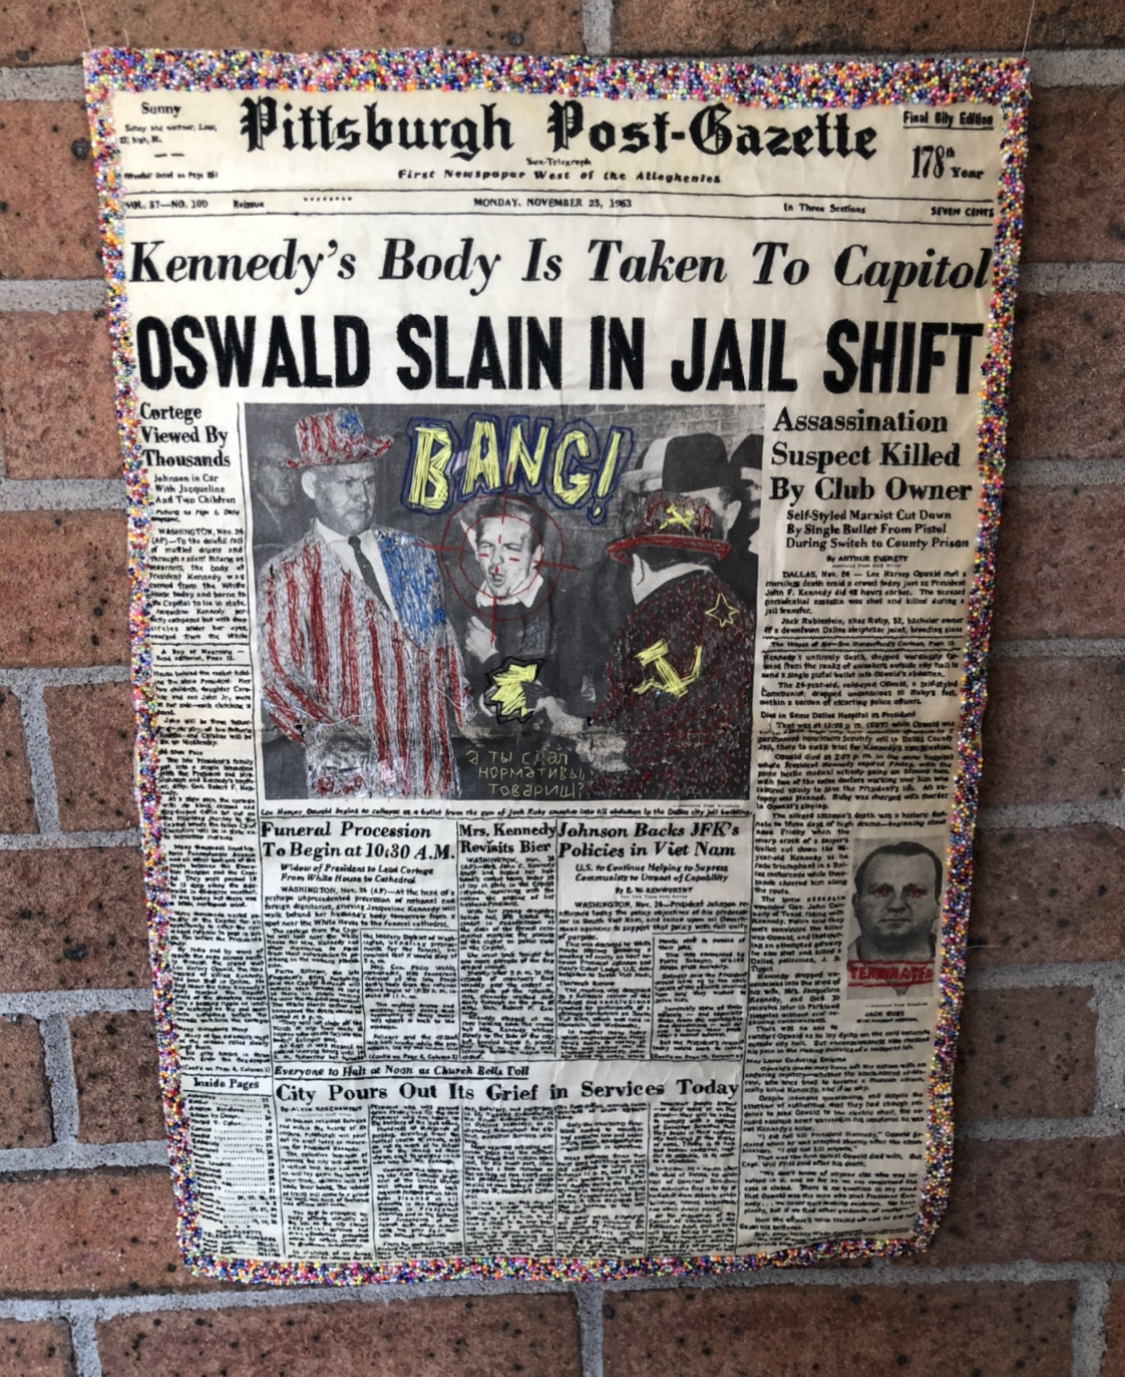 Bang: Oswald slain in Jail shift